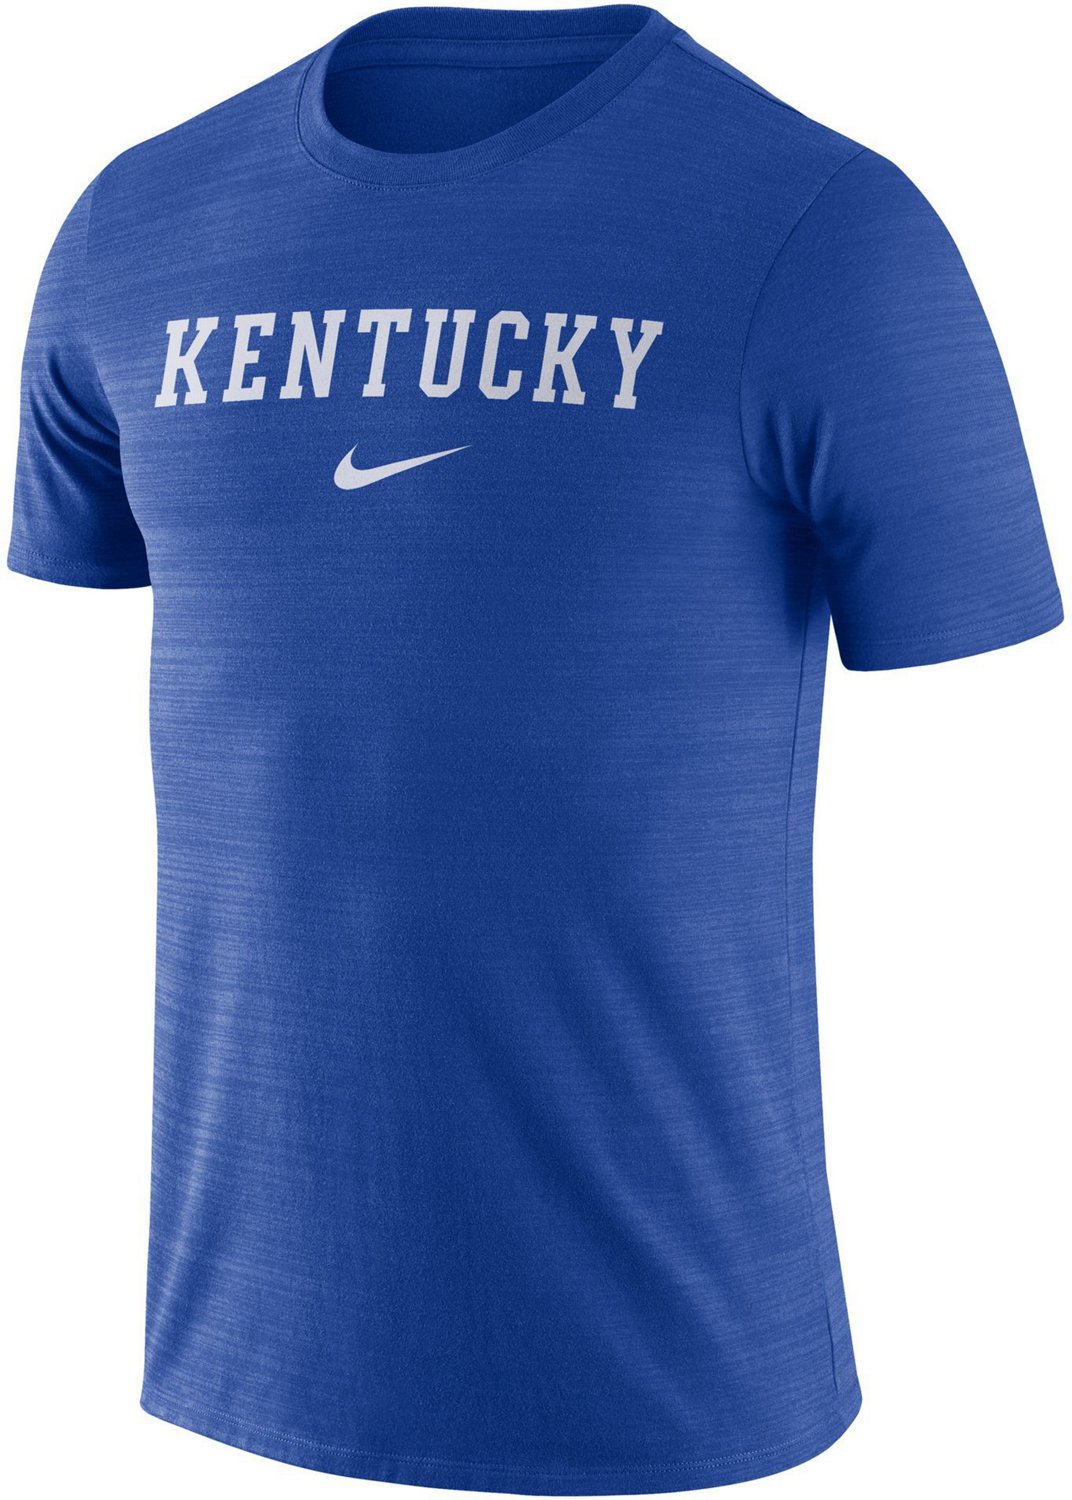 Nike Men's University of Kentucky Dri-FIT Team Issue Velocity T-shirt ...